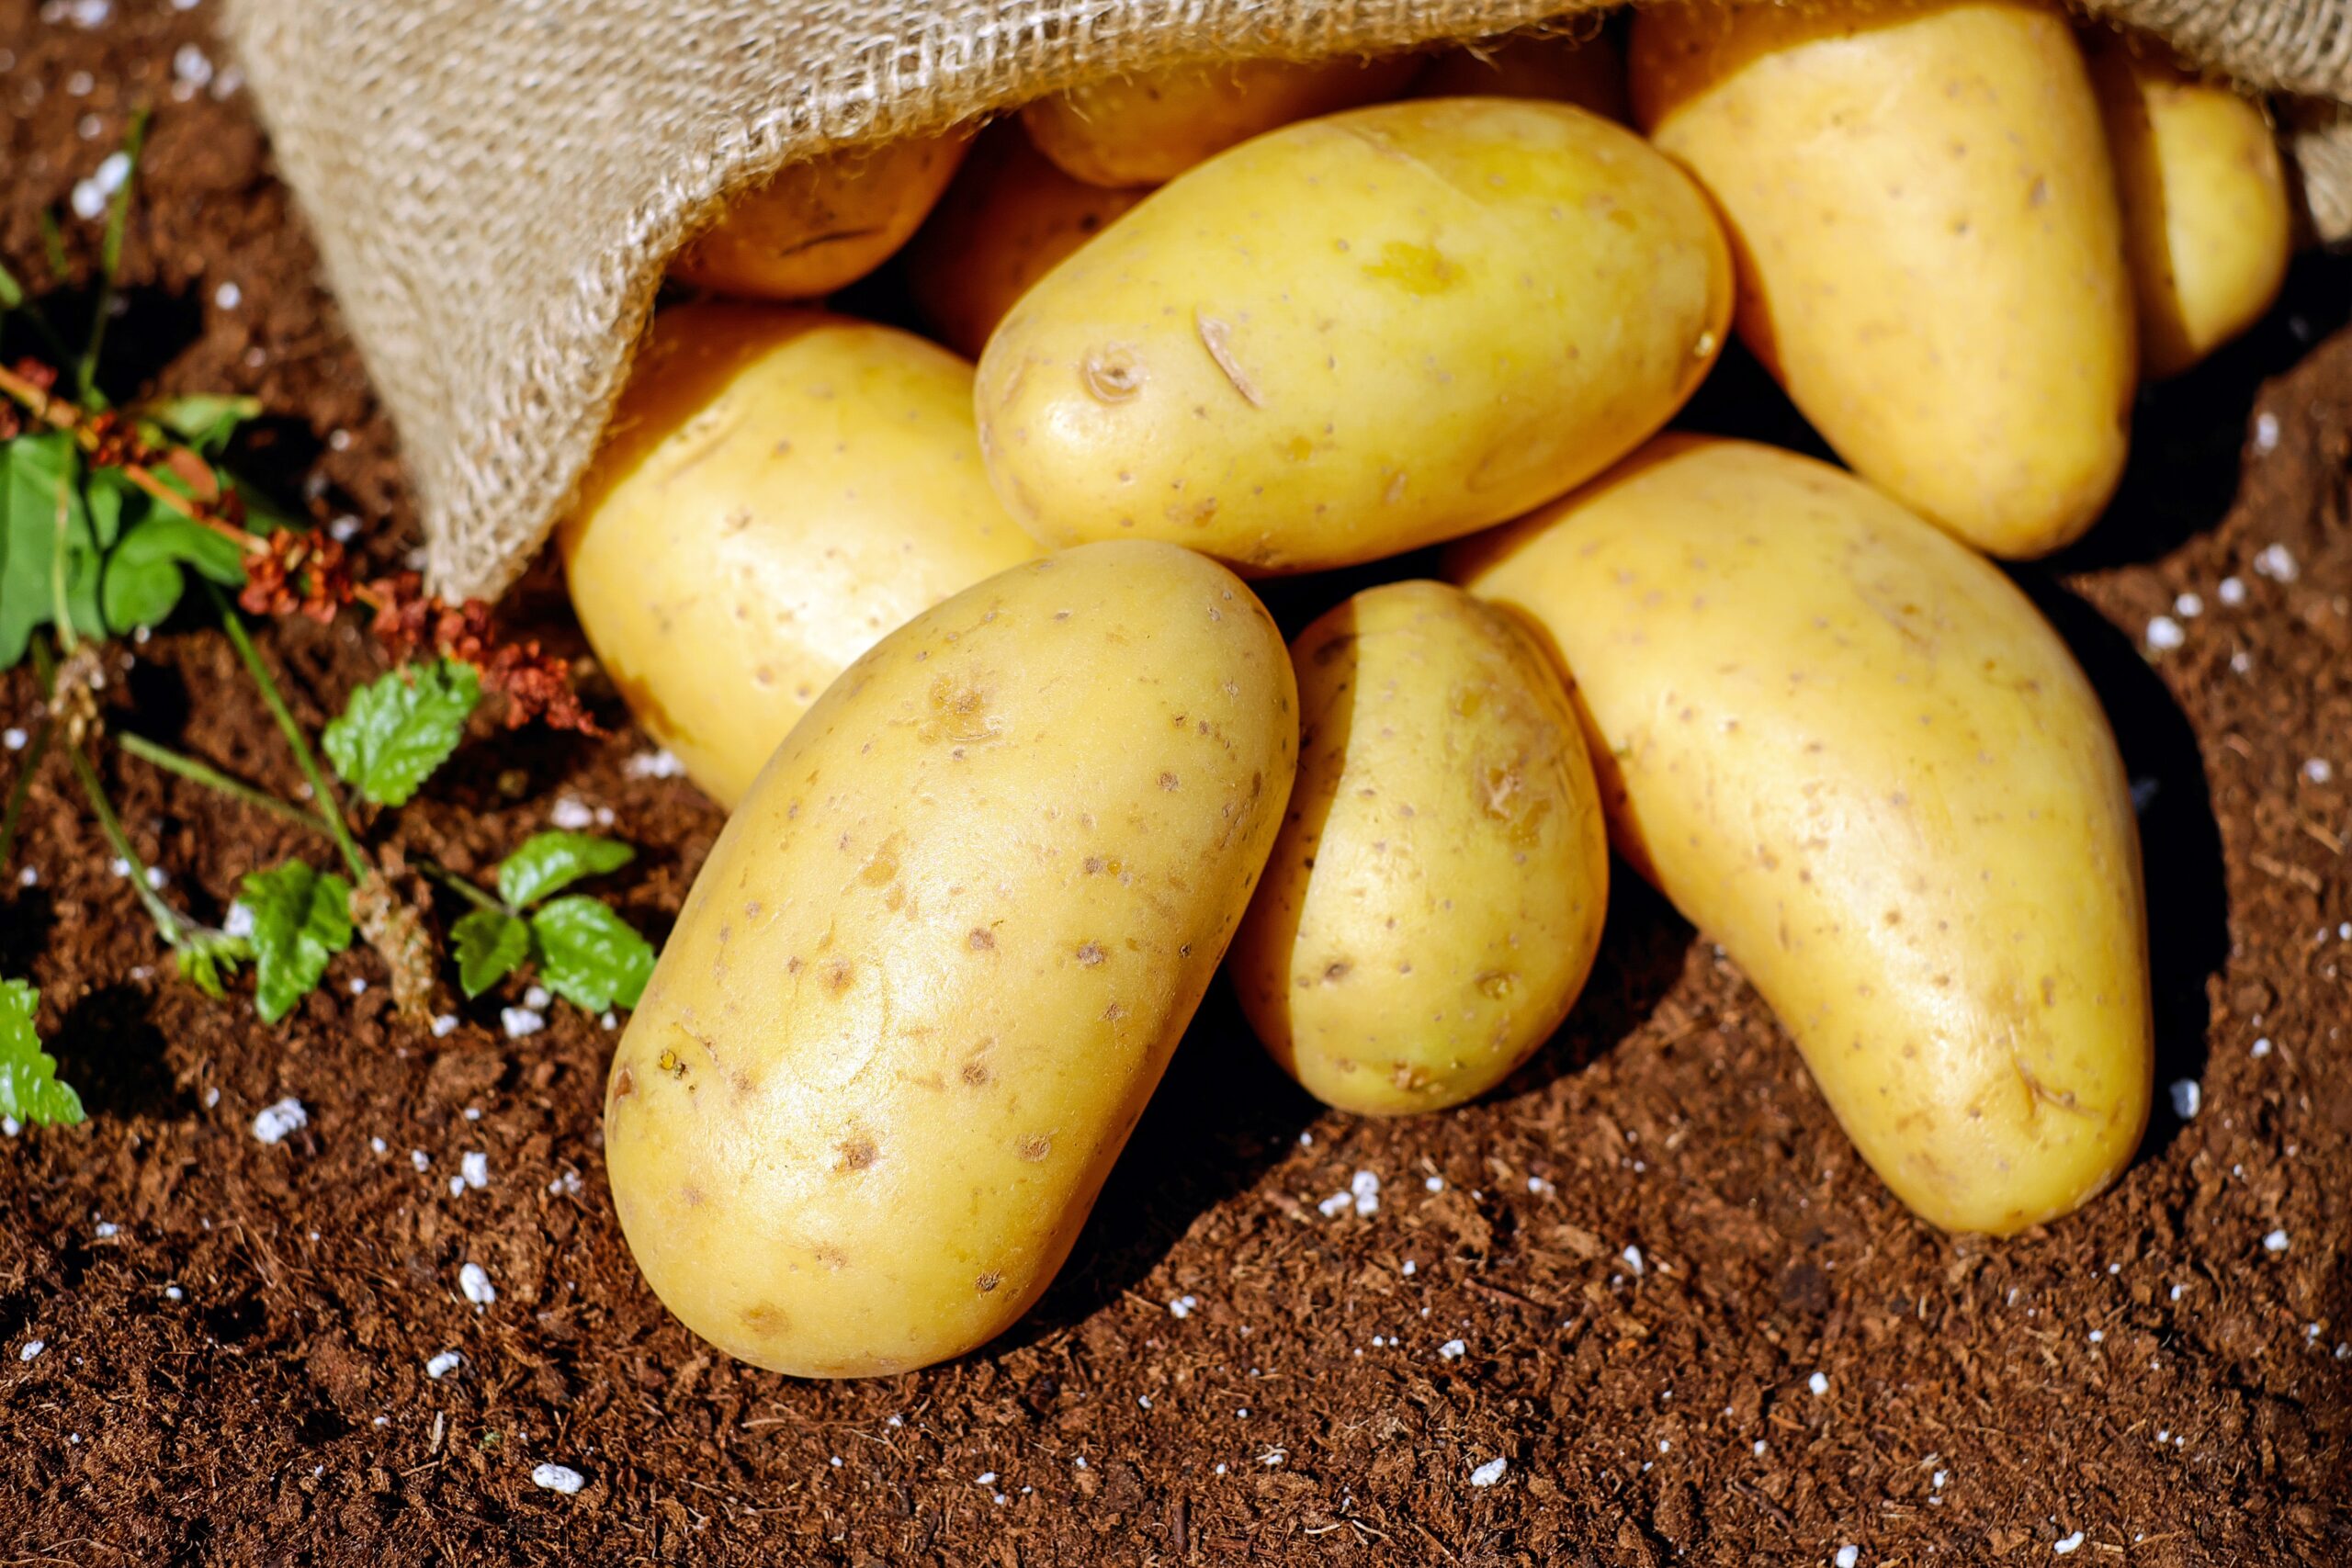 production technology of potato